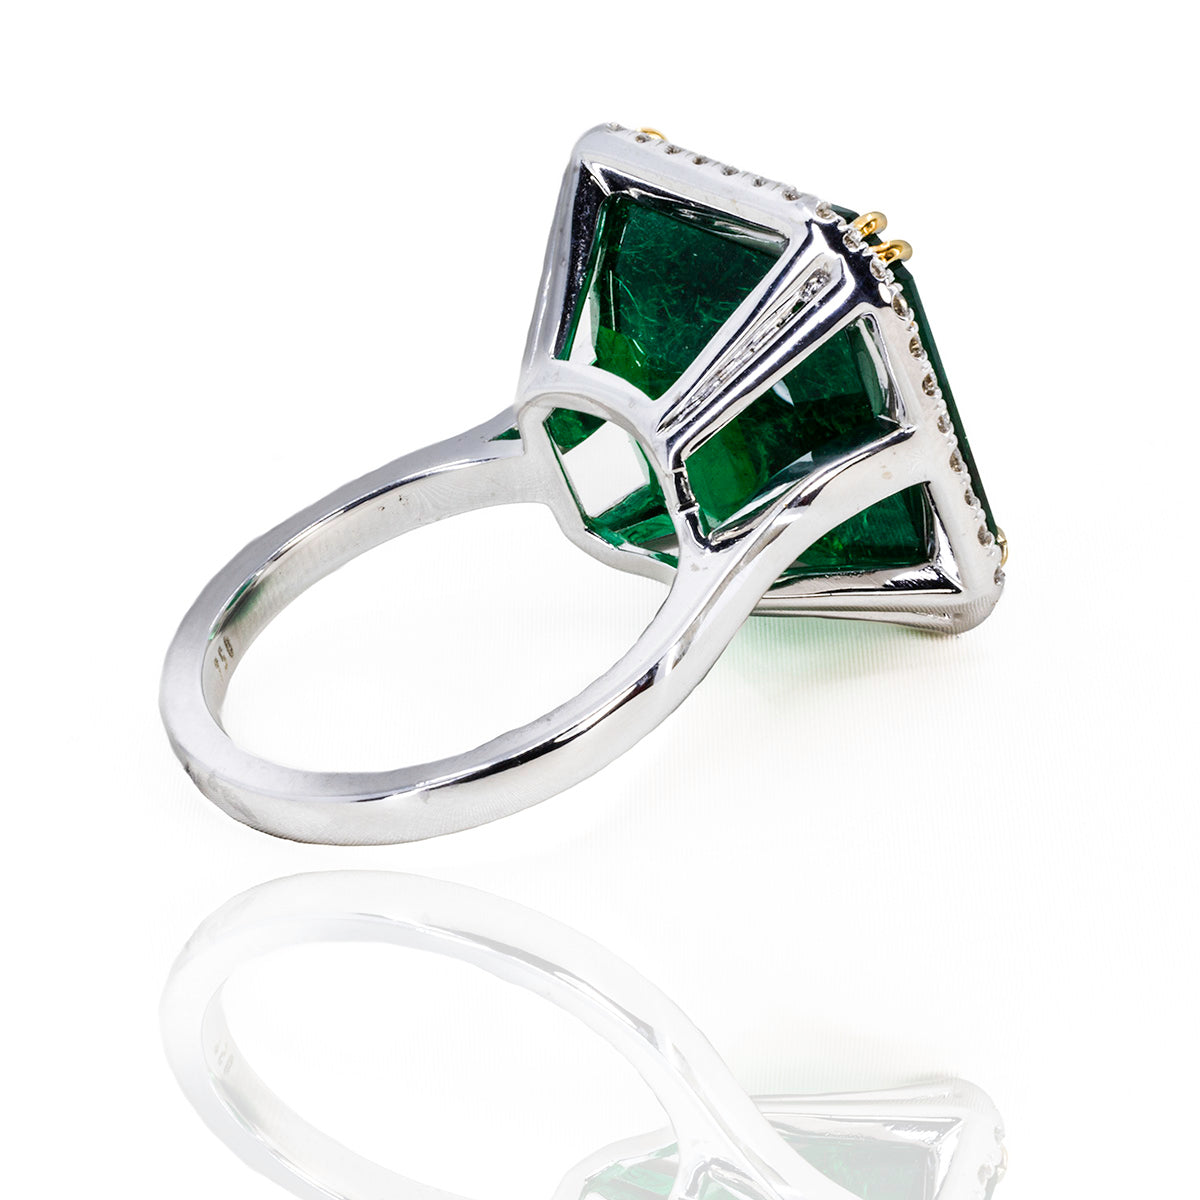 15.61 Carat Emerald Ring